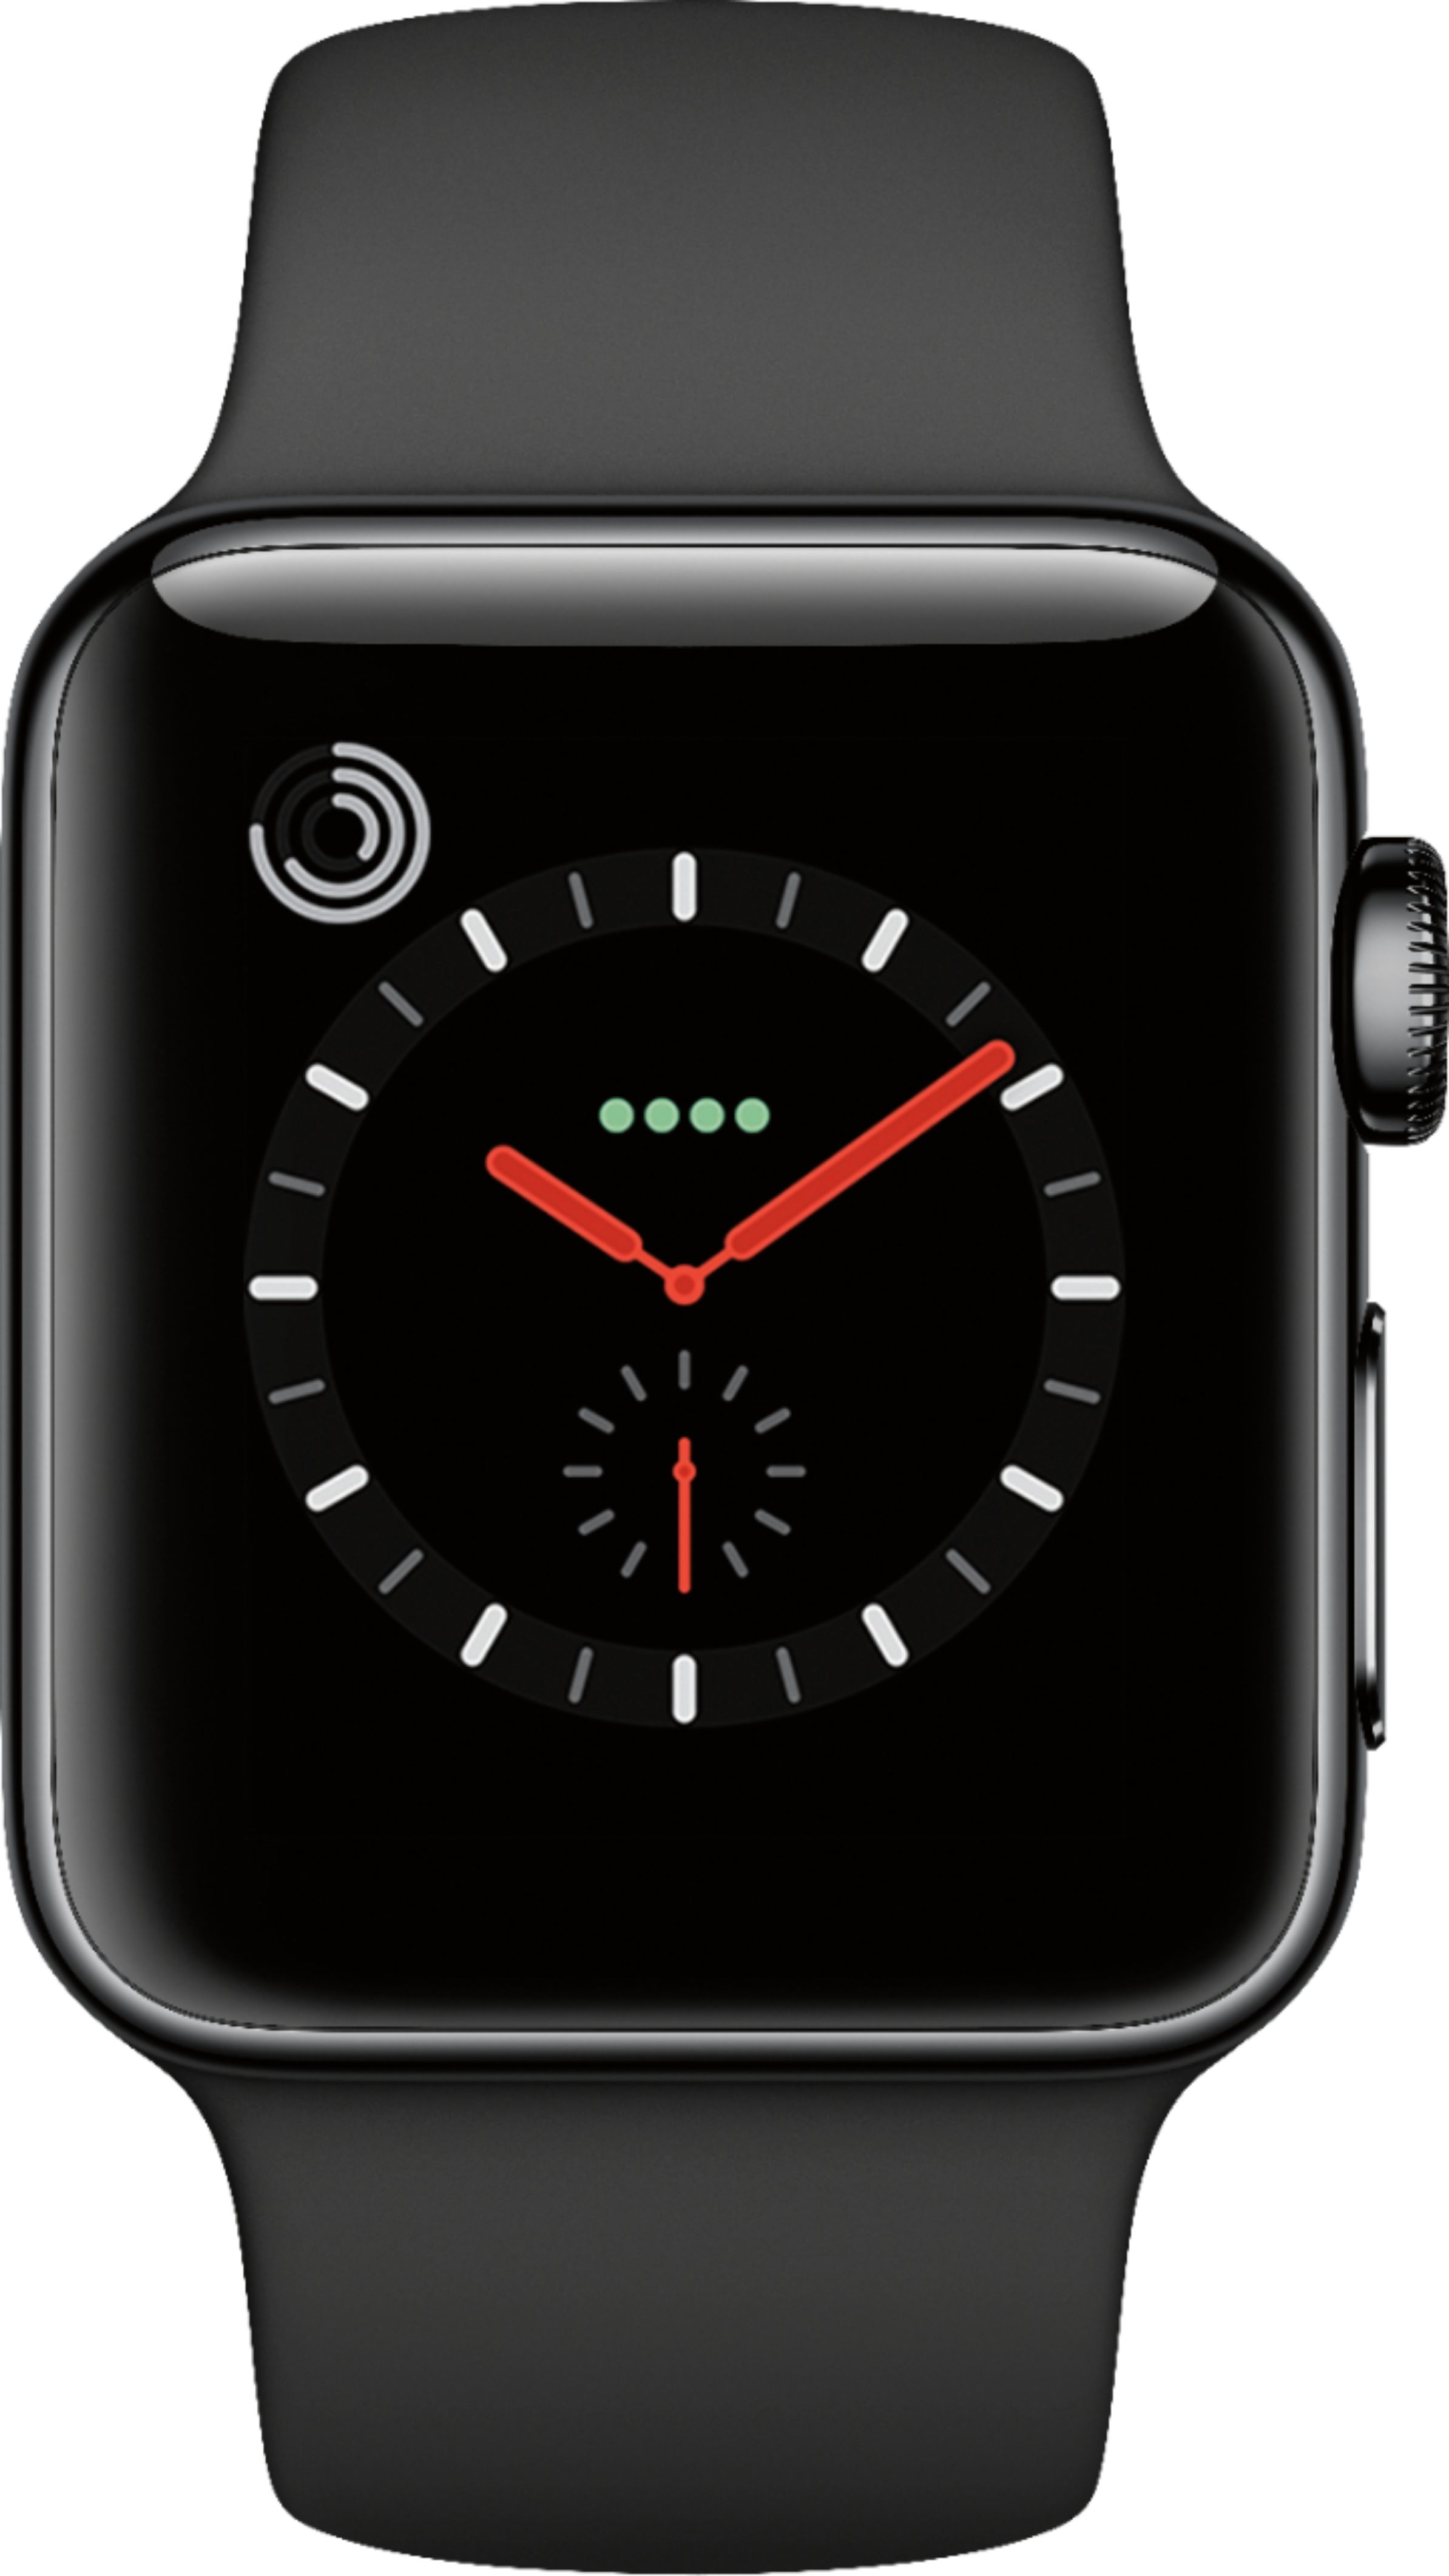 Customer Reviews GSFR Apple Watch Series 3 (GPS + Cellular), 38mm